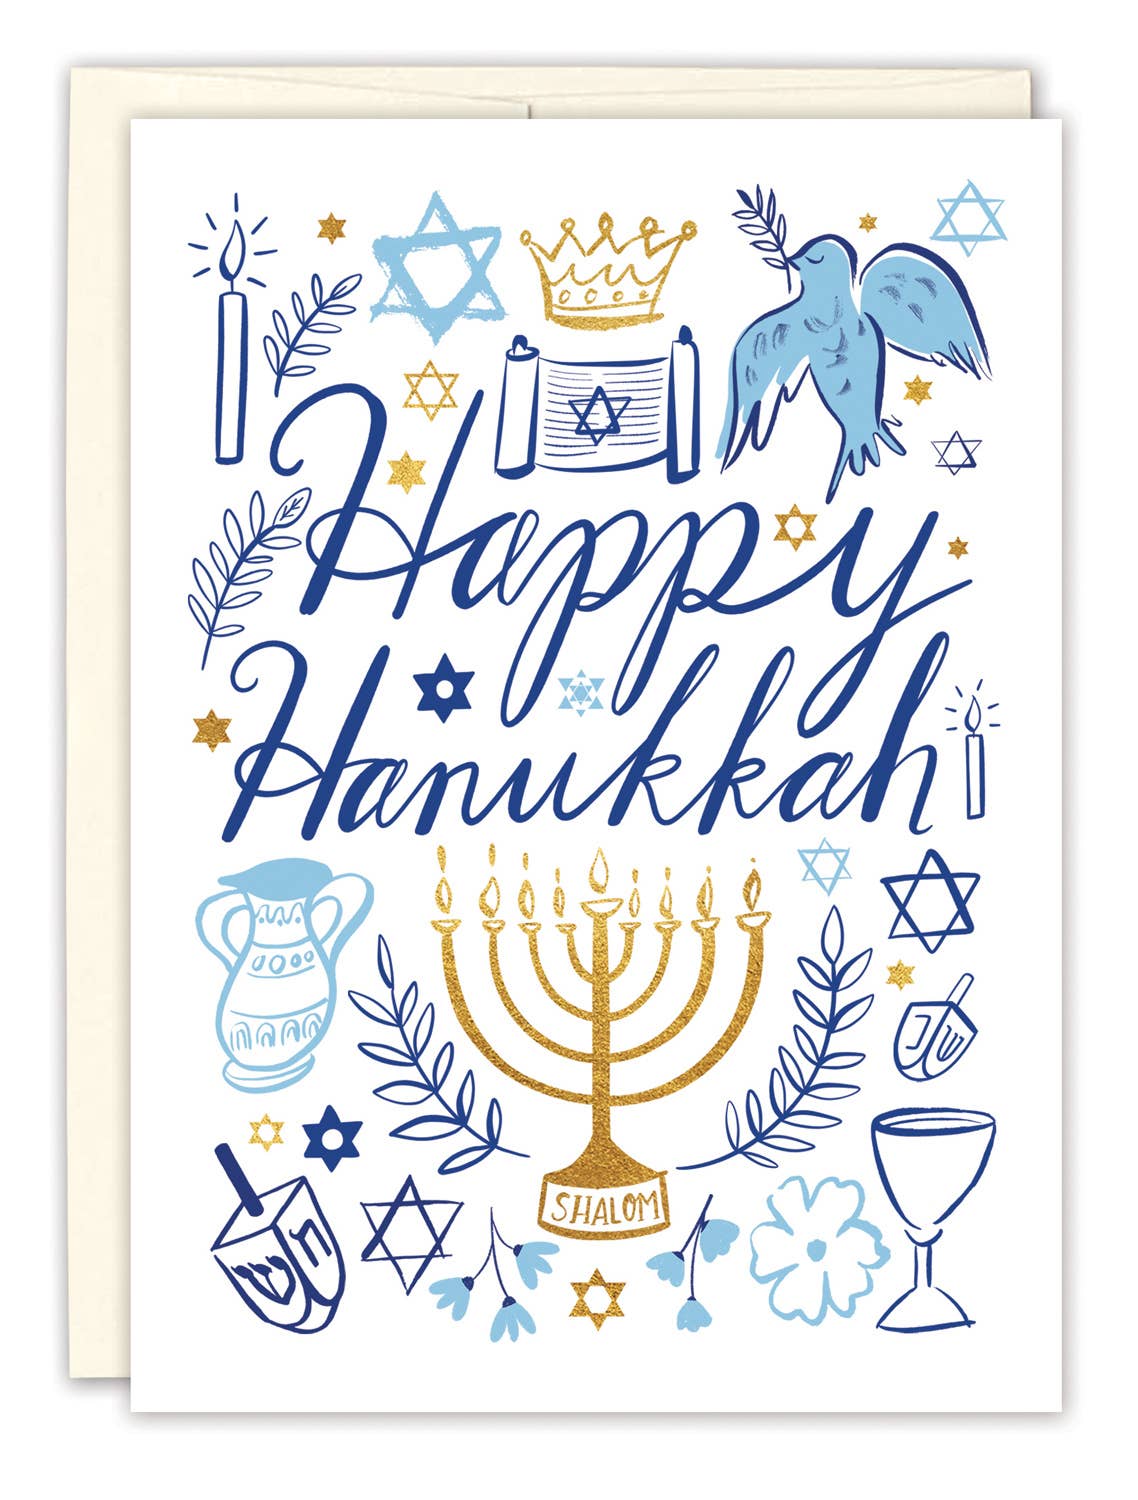 Happy Hanukkah Boxed Holiday Cards